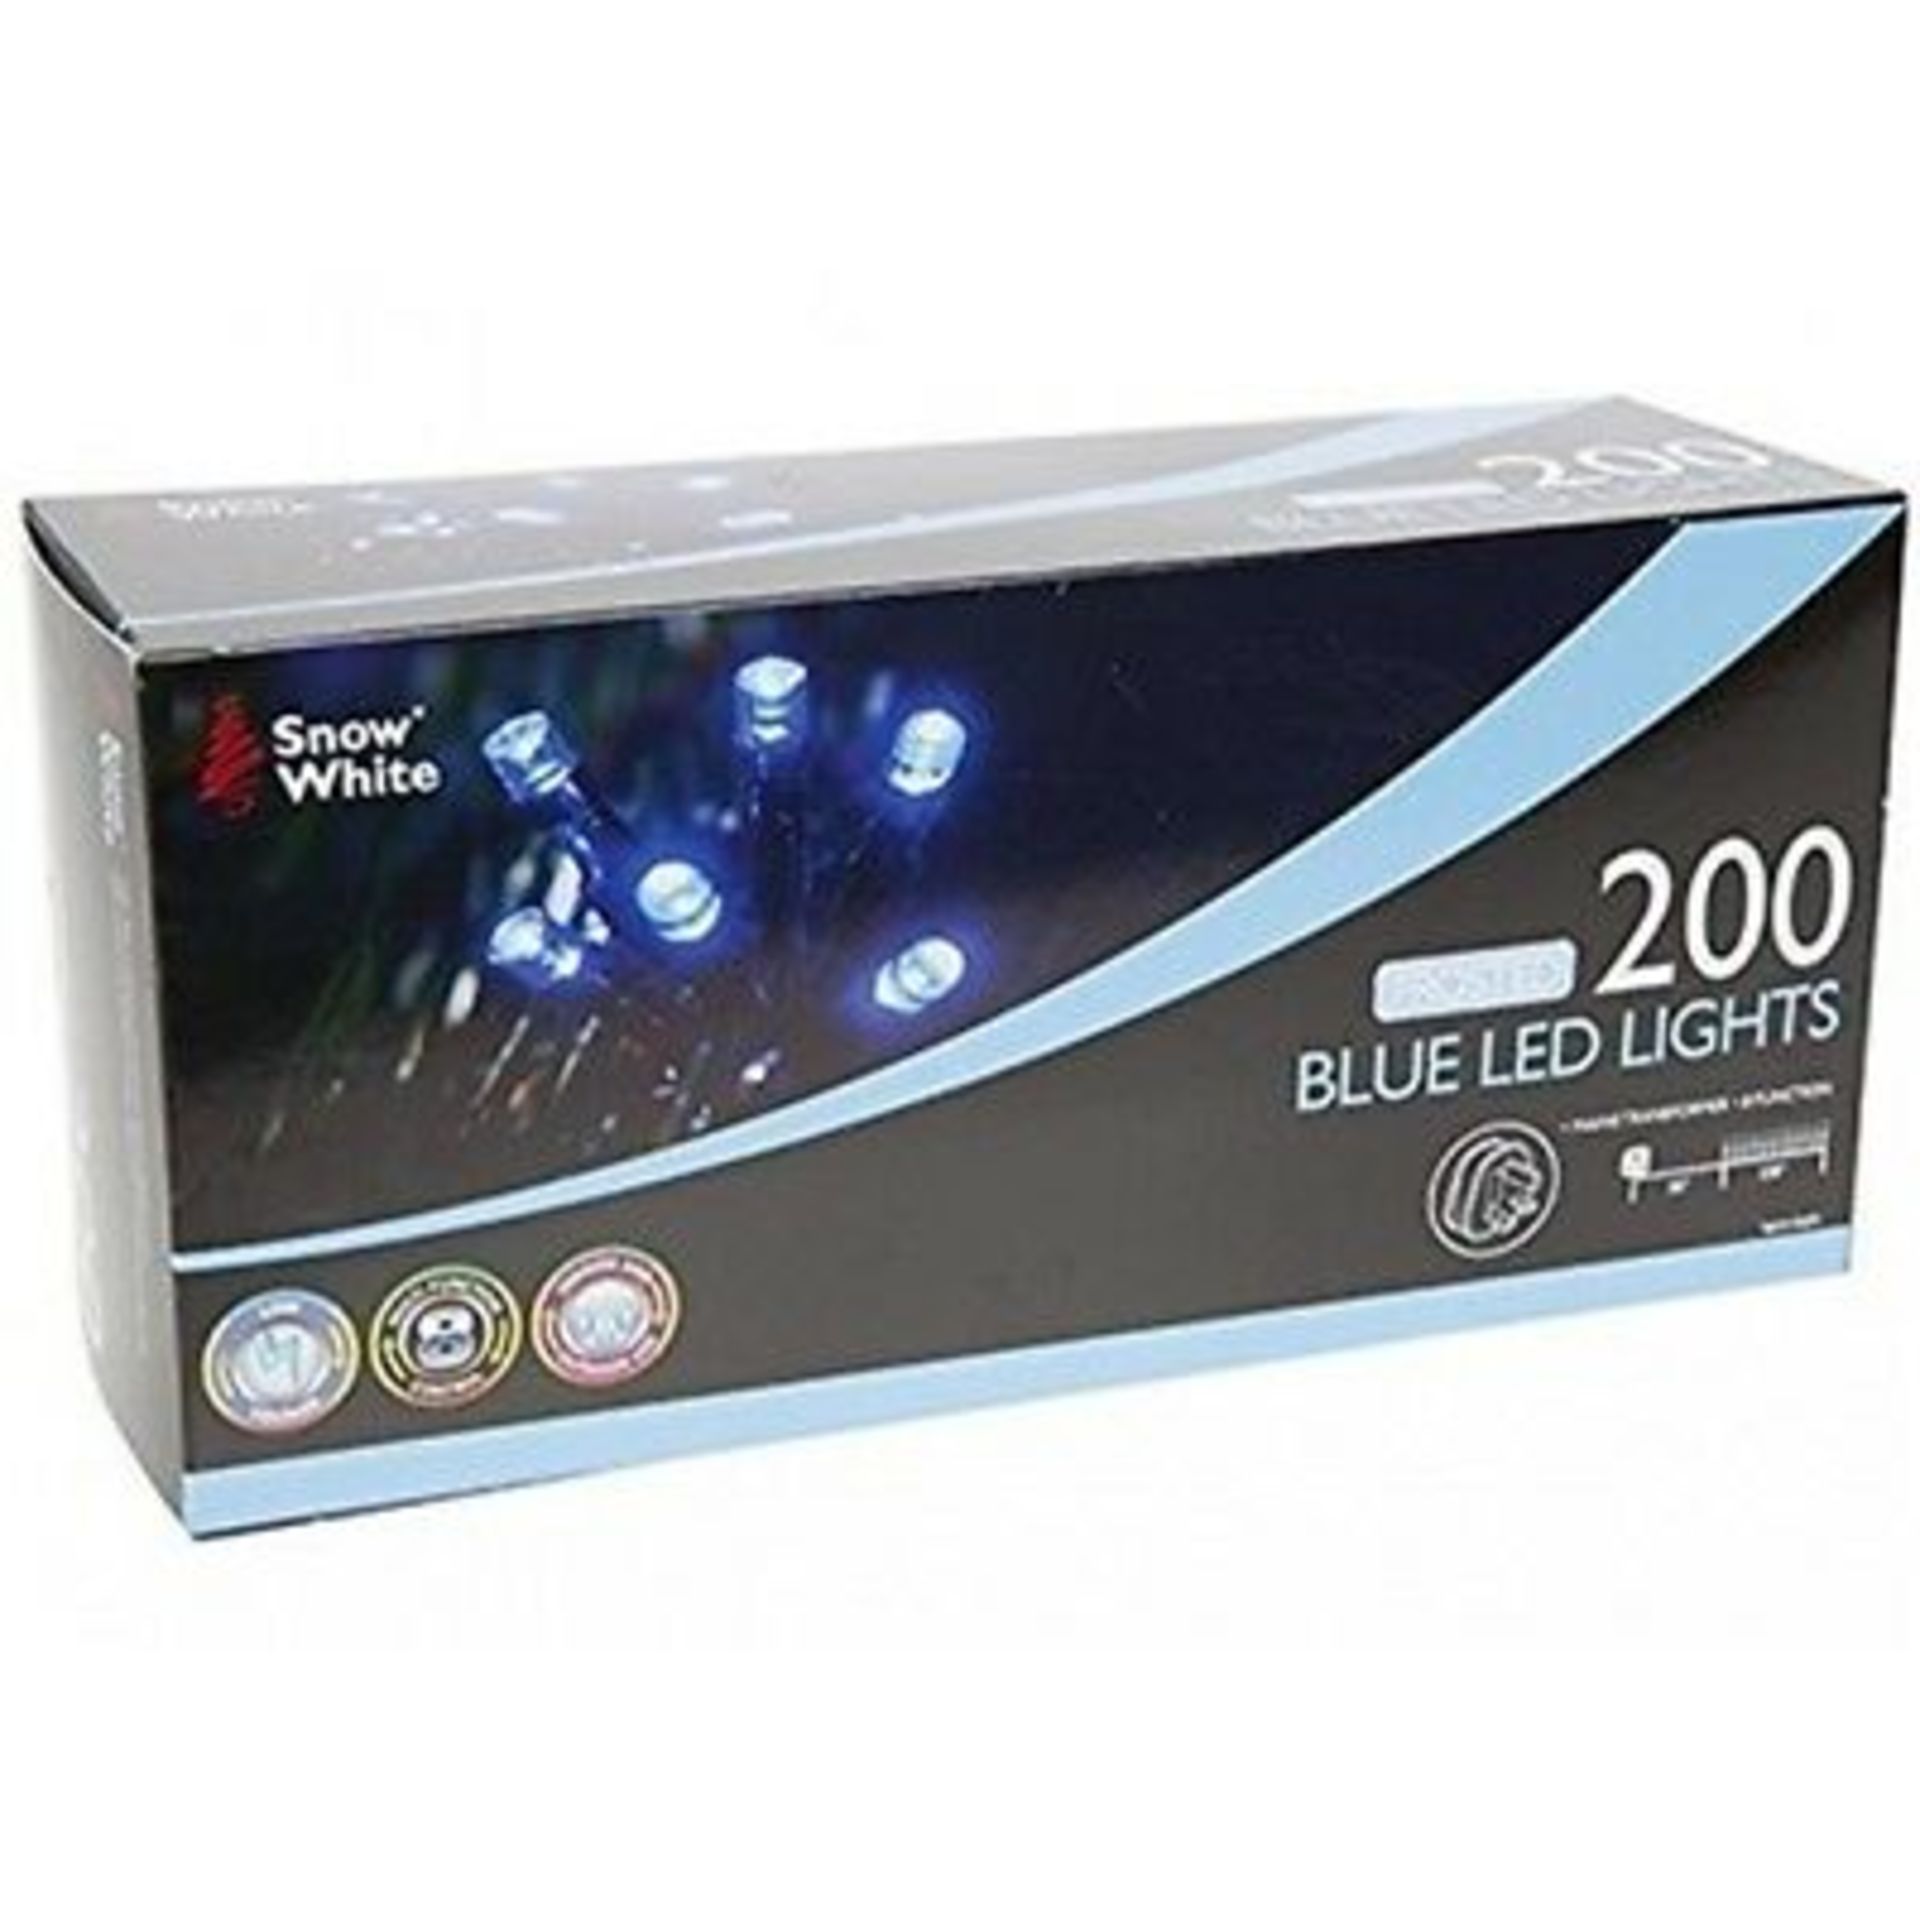 V Brand New 200 Blue Frosted LED Multi Function Christmas Lights